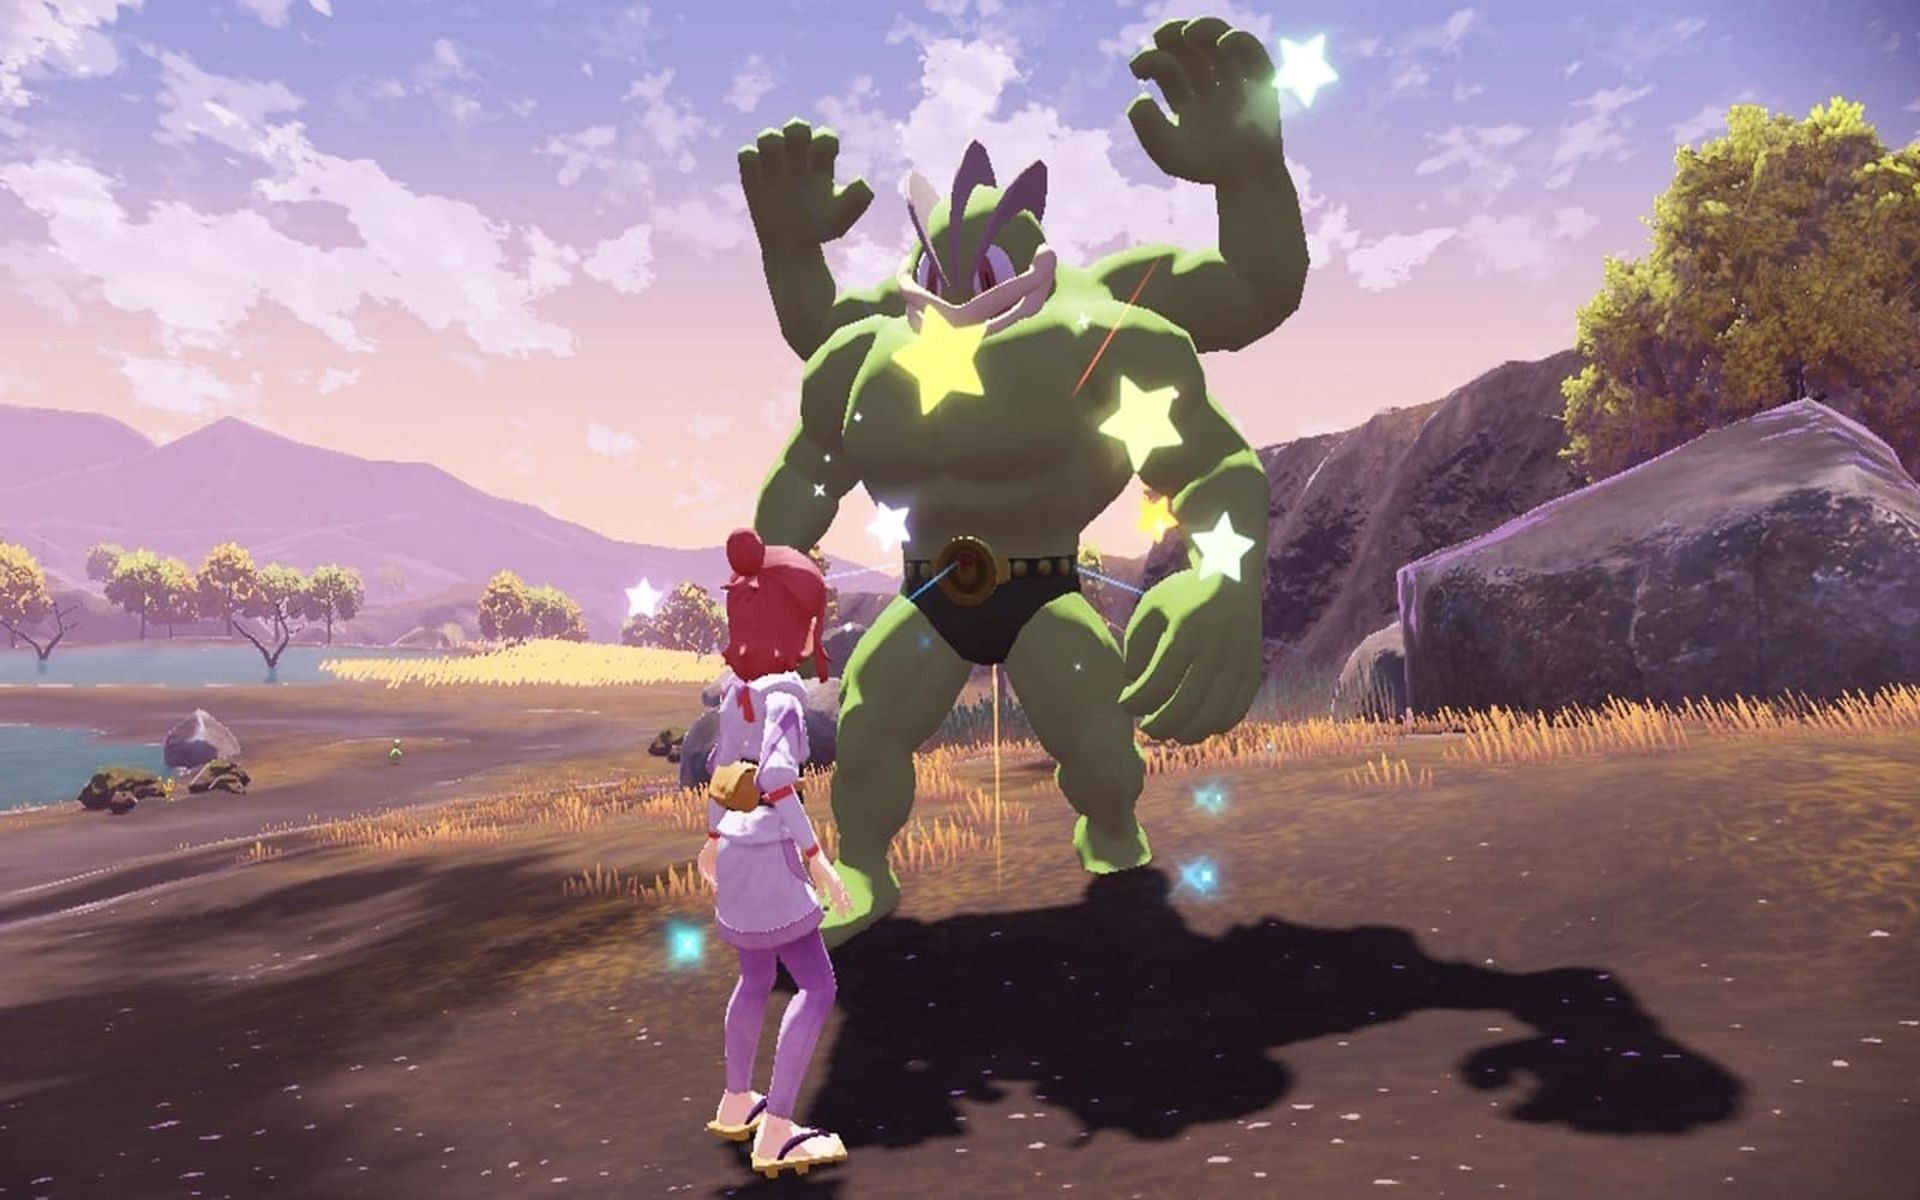 Pokémon Legends: Arceus – Daybreak update, explained